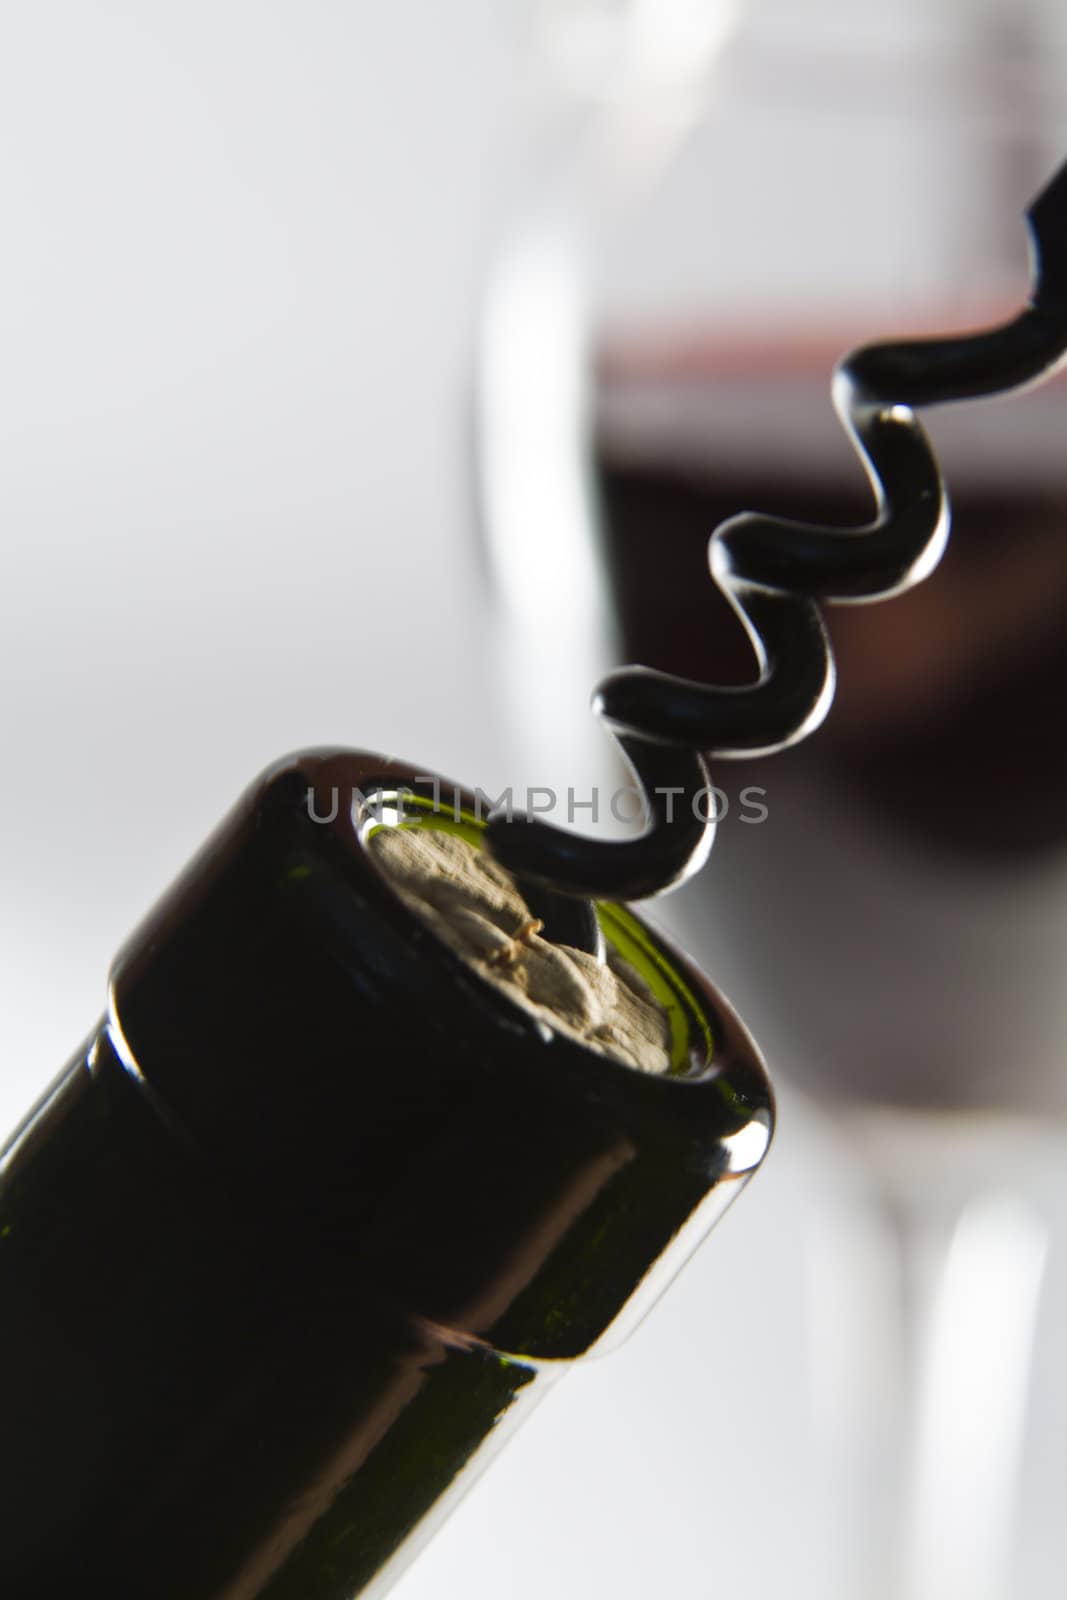 closeup of a wine bottle